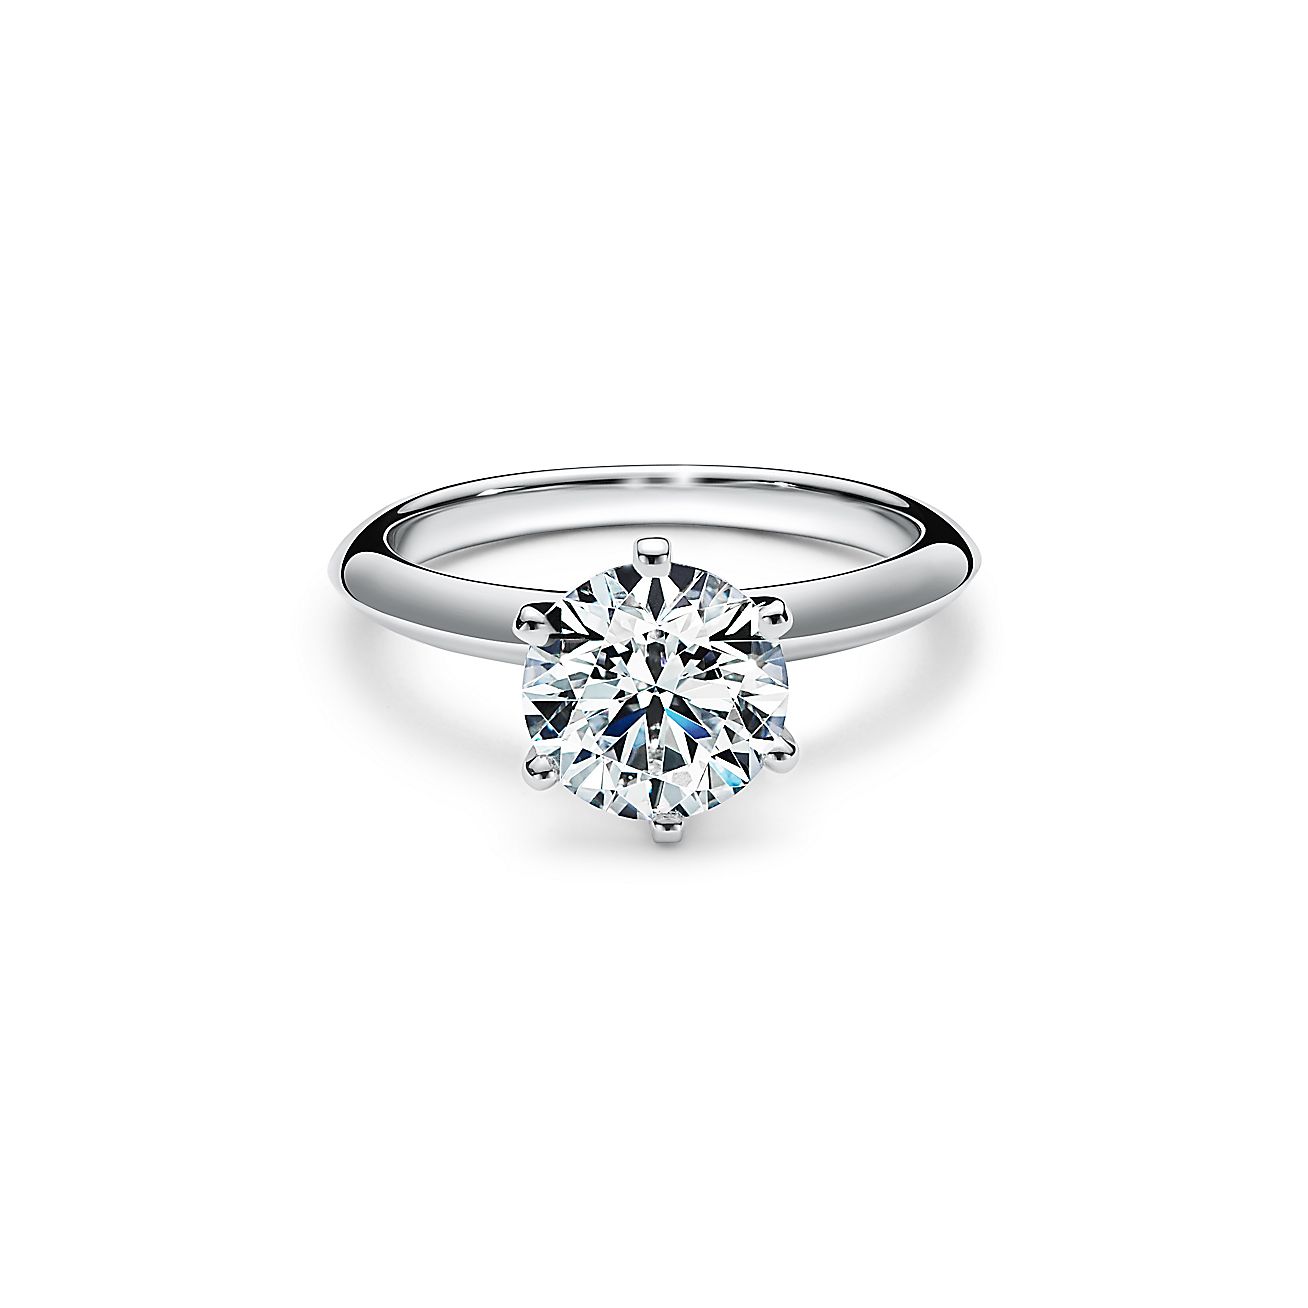 Herrie Reusachtig Handvol The Tiffany® Setting Engagement Ring in Platinum